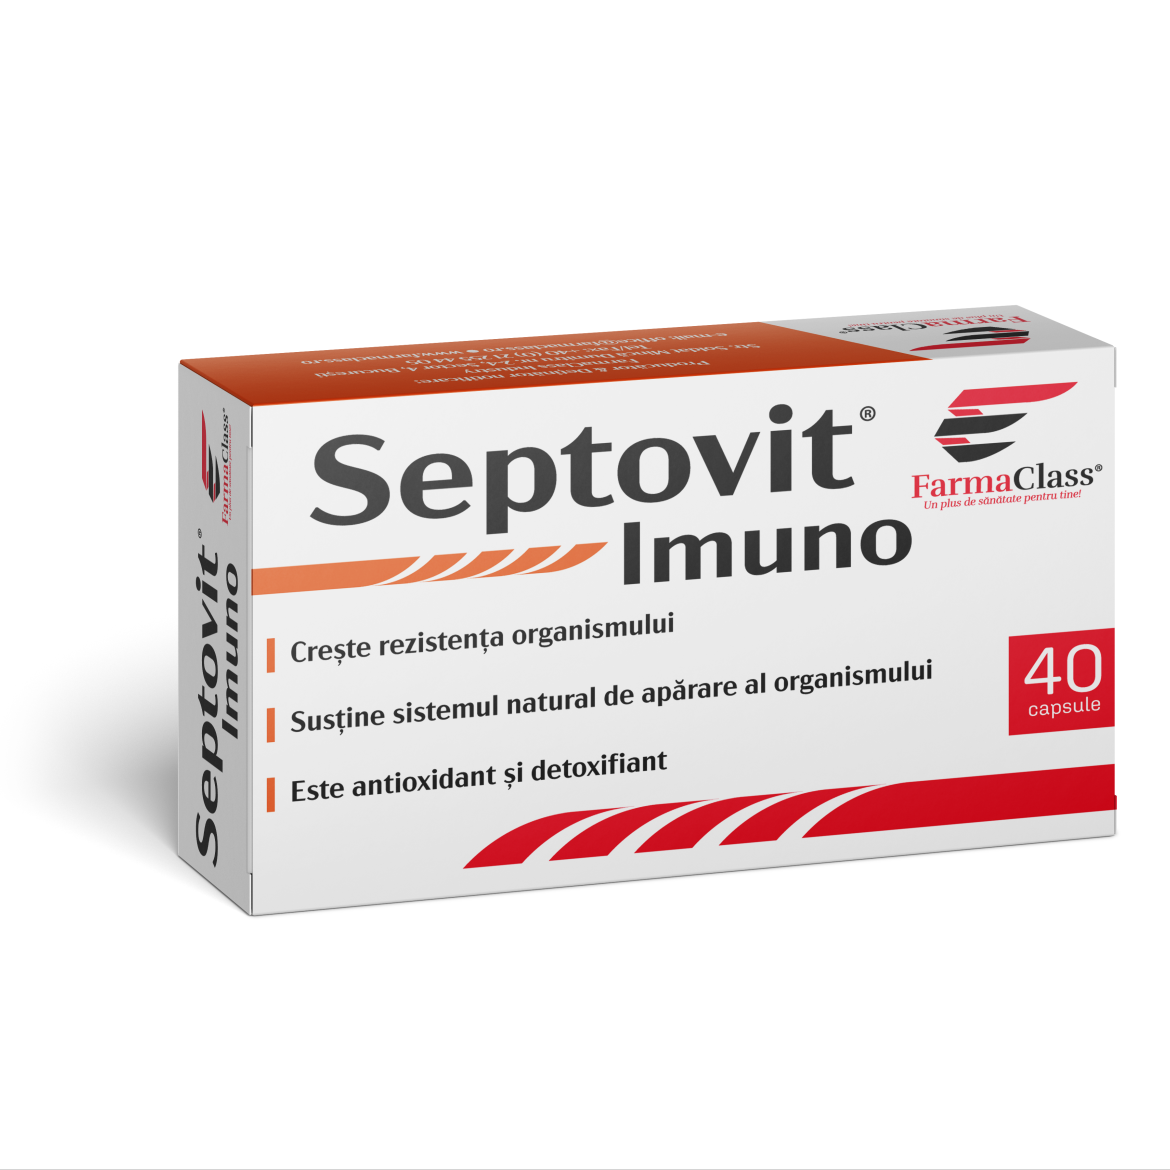 Imunitate - Septovit Imuno, 40 capsule, Farma Class, nordpharm.ro